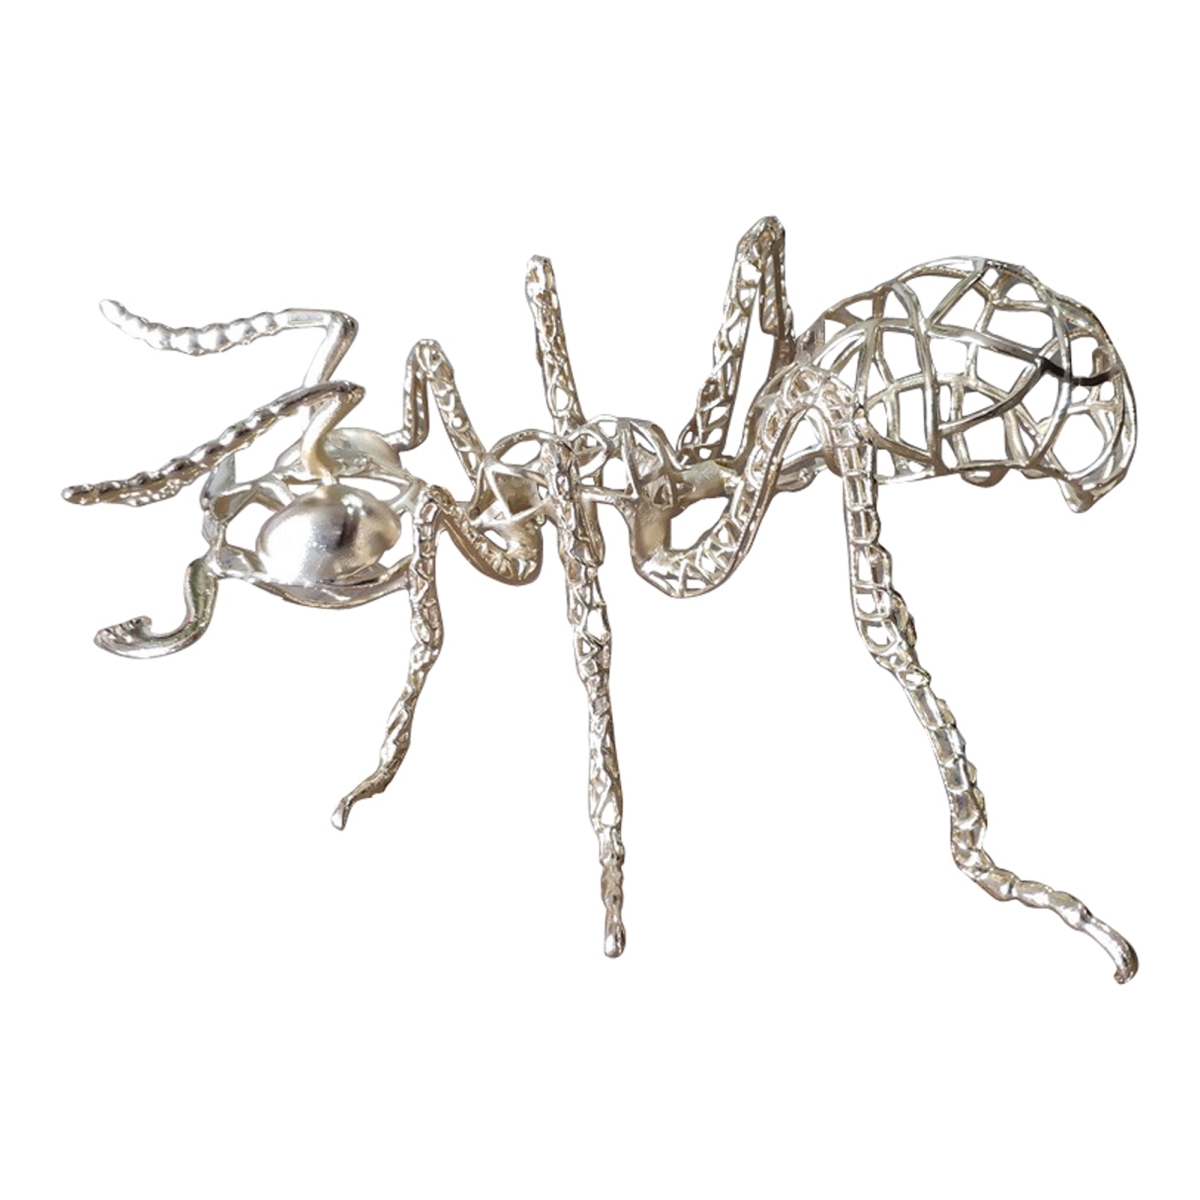 La-1077-32 Glam Ant Wall Sculpture